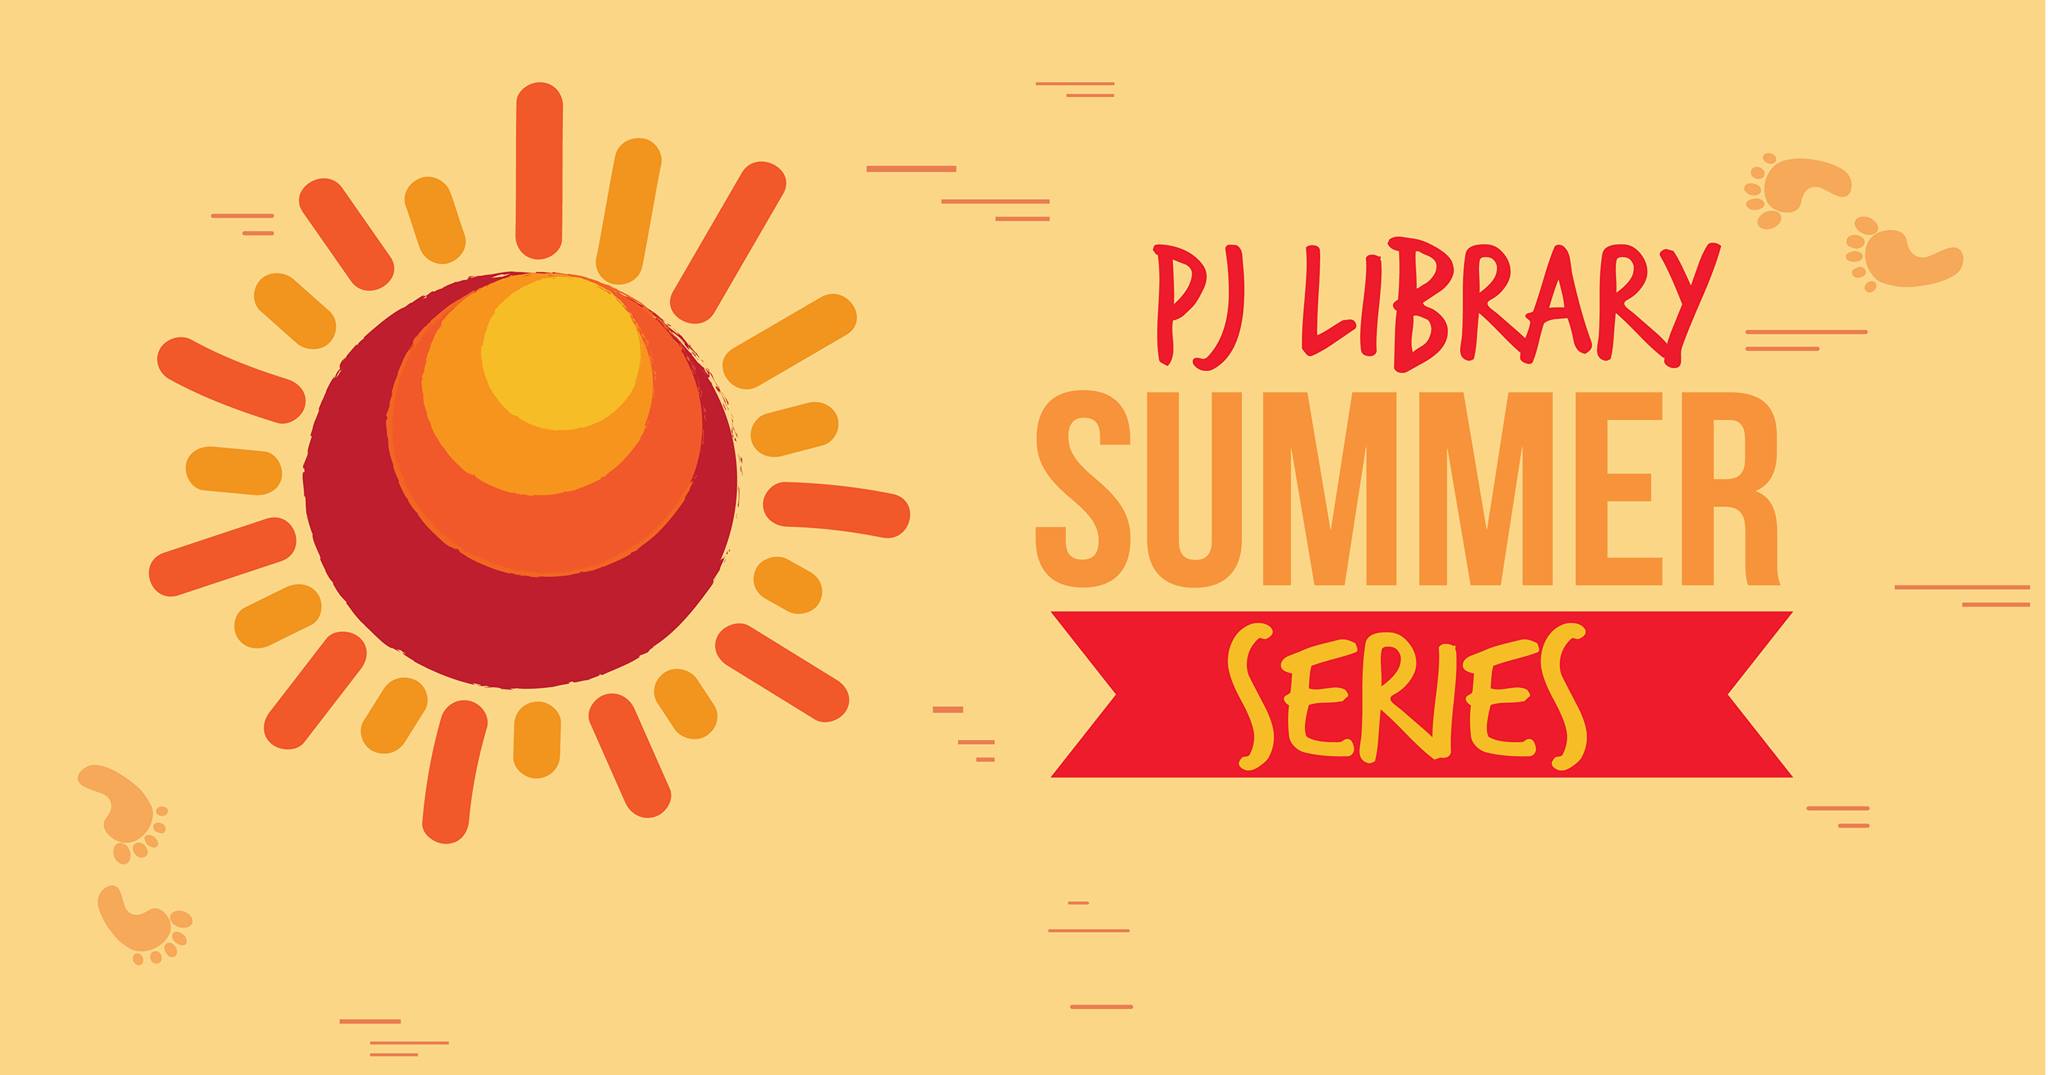 PJ Library Summer Series Atlanta Jewish Connector